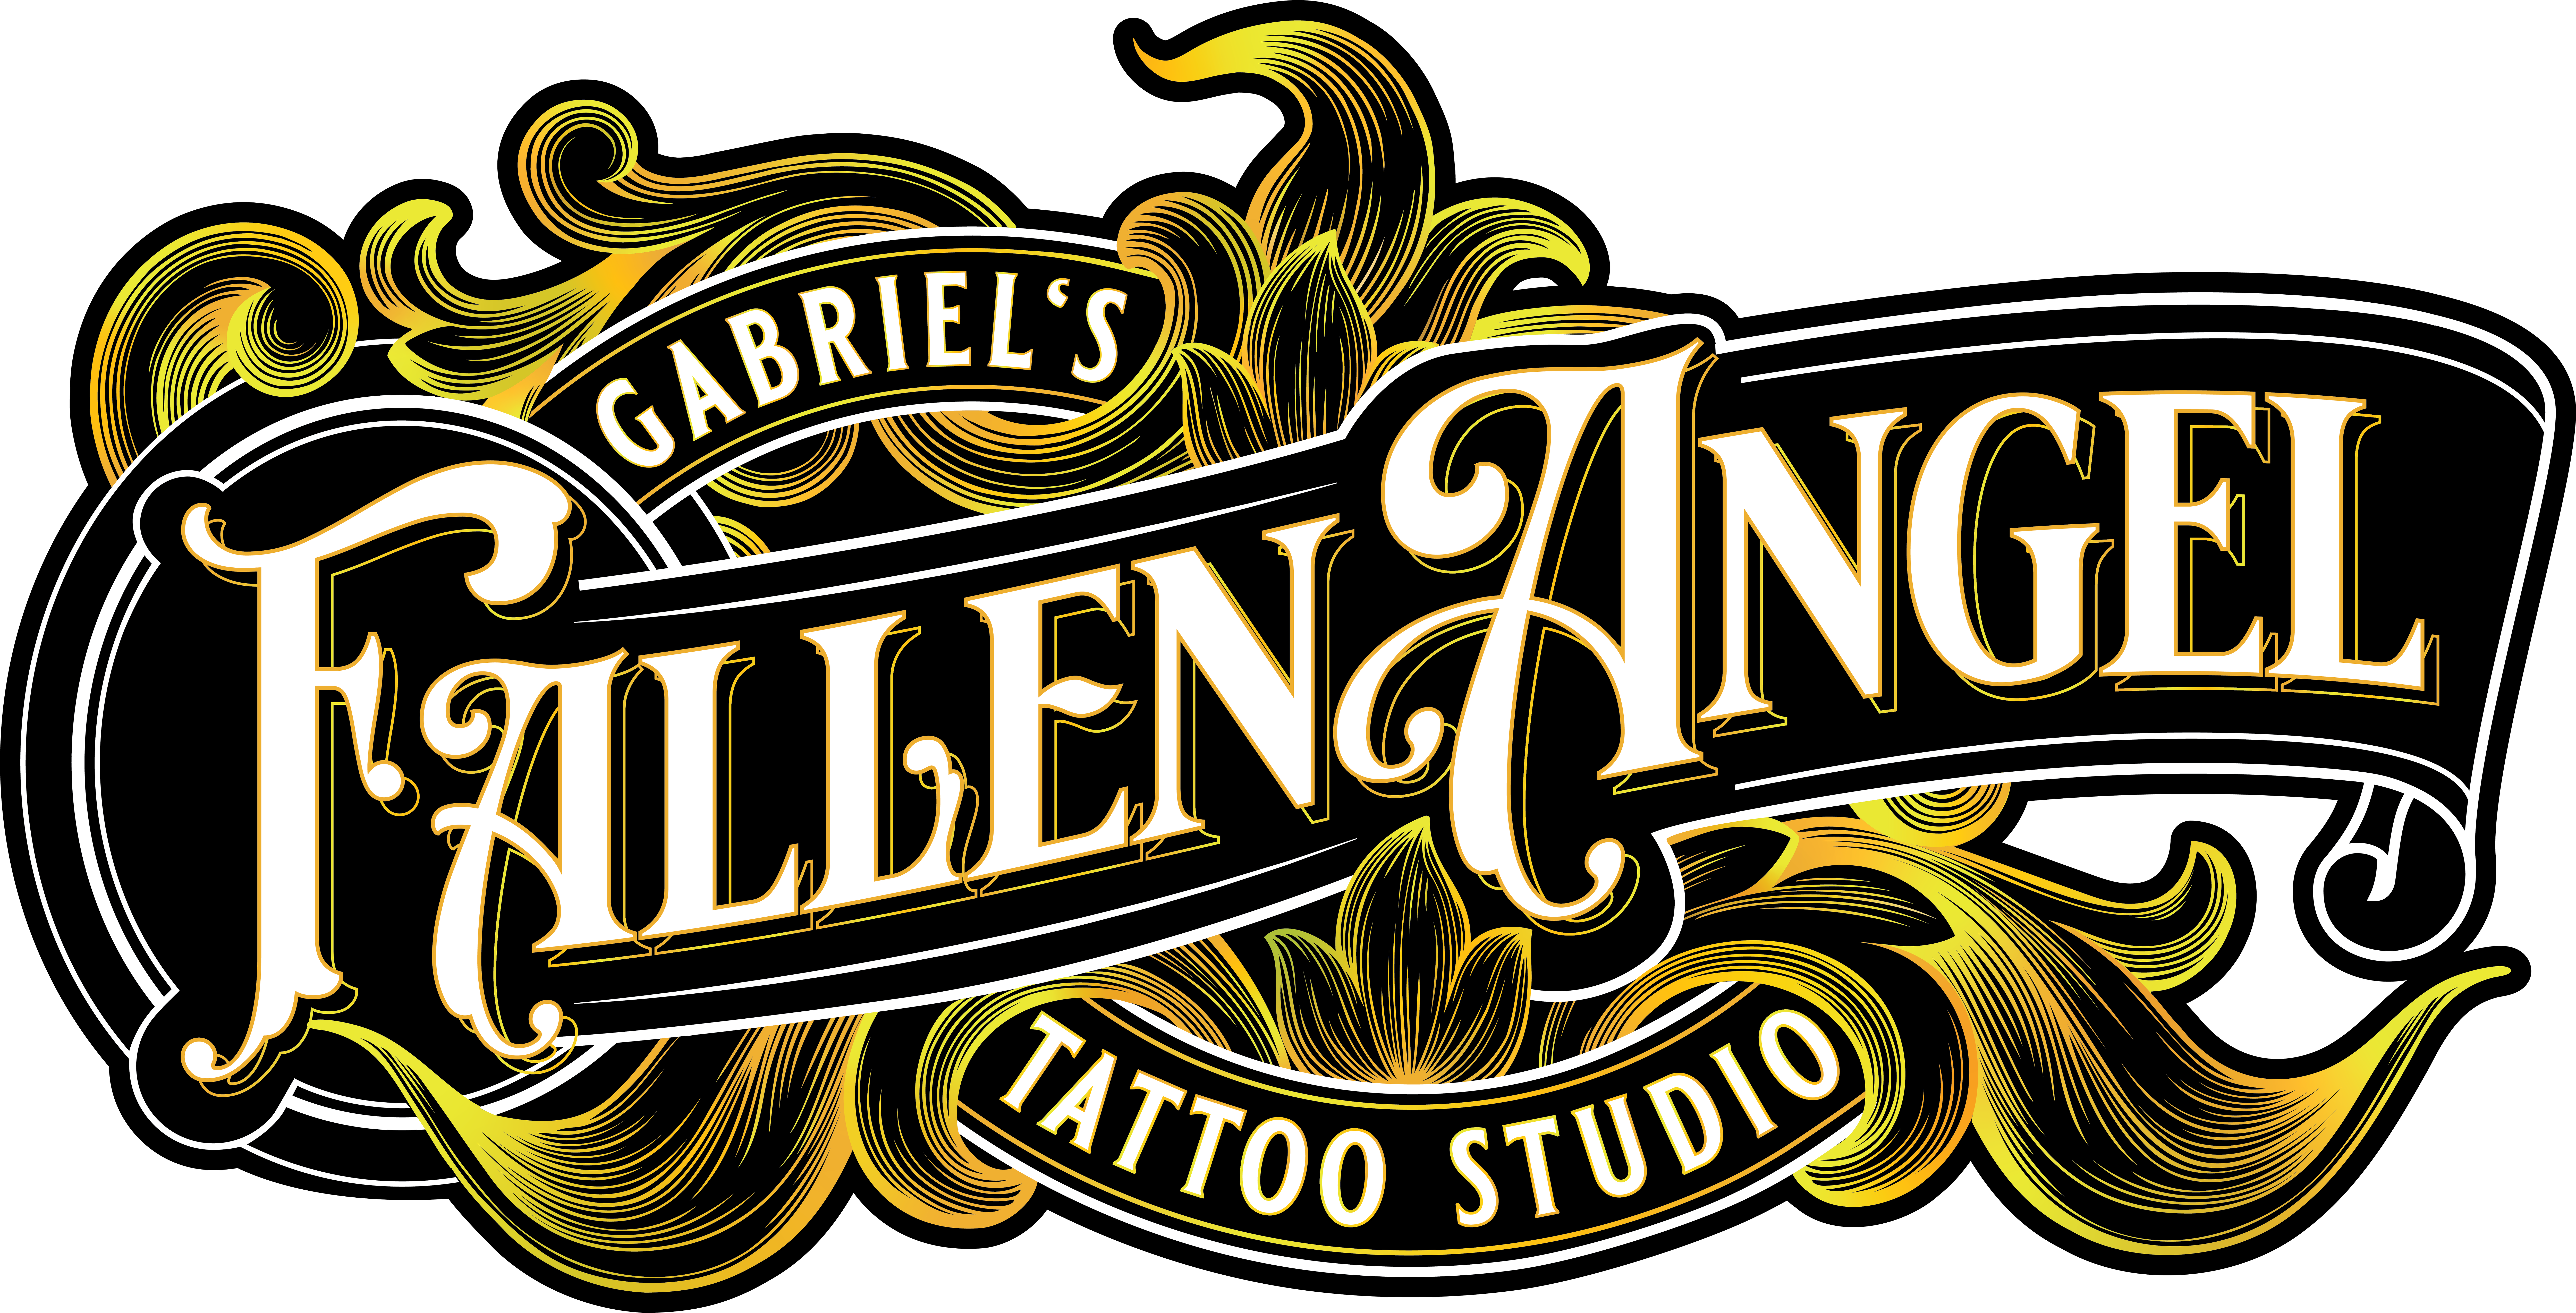 Gabriel's Fallen Angel Tattoo Studio